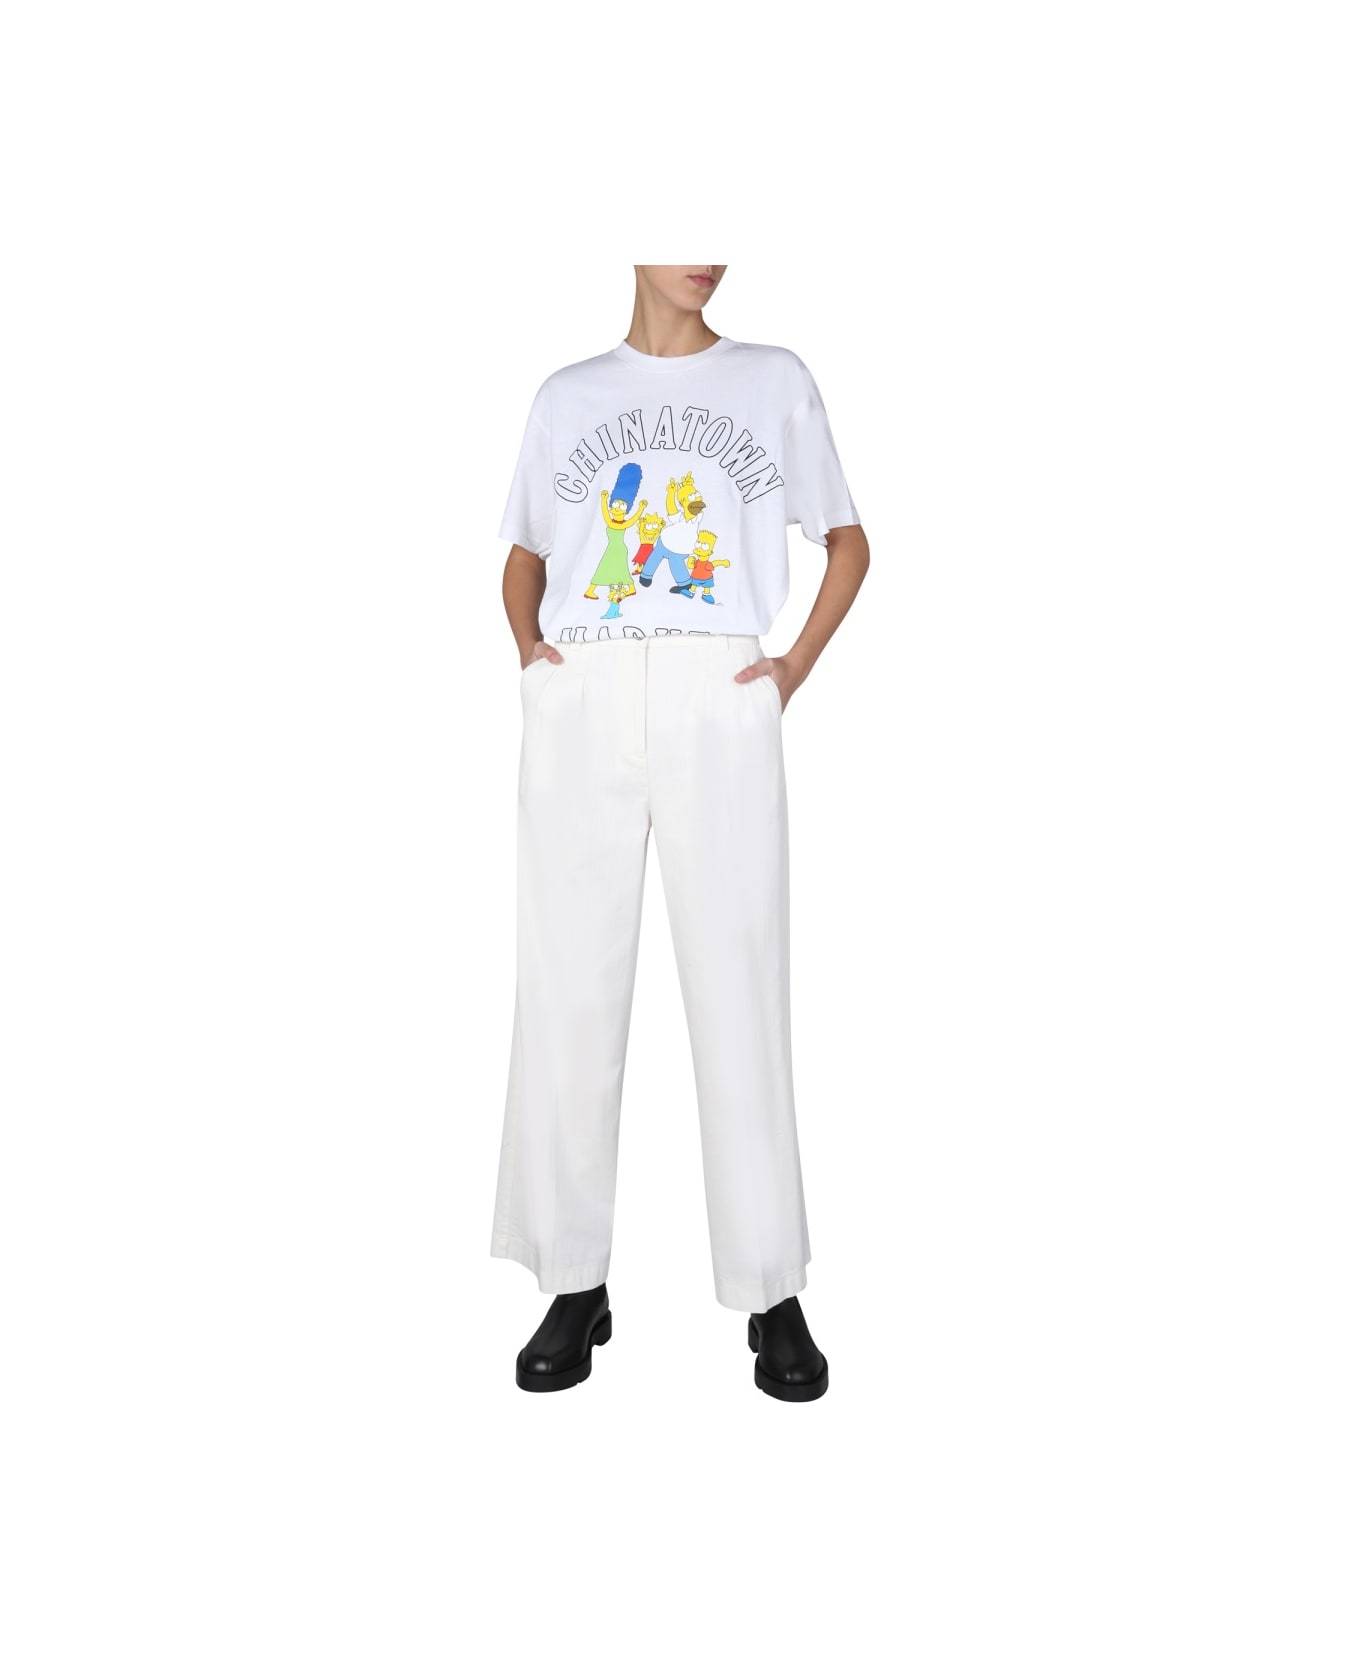 Market "family Simpson" T-shirt - WHITE Tシャツ